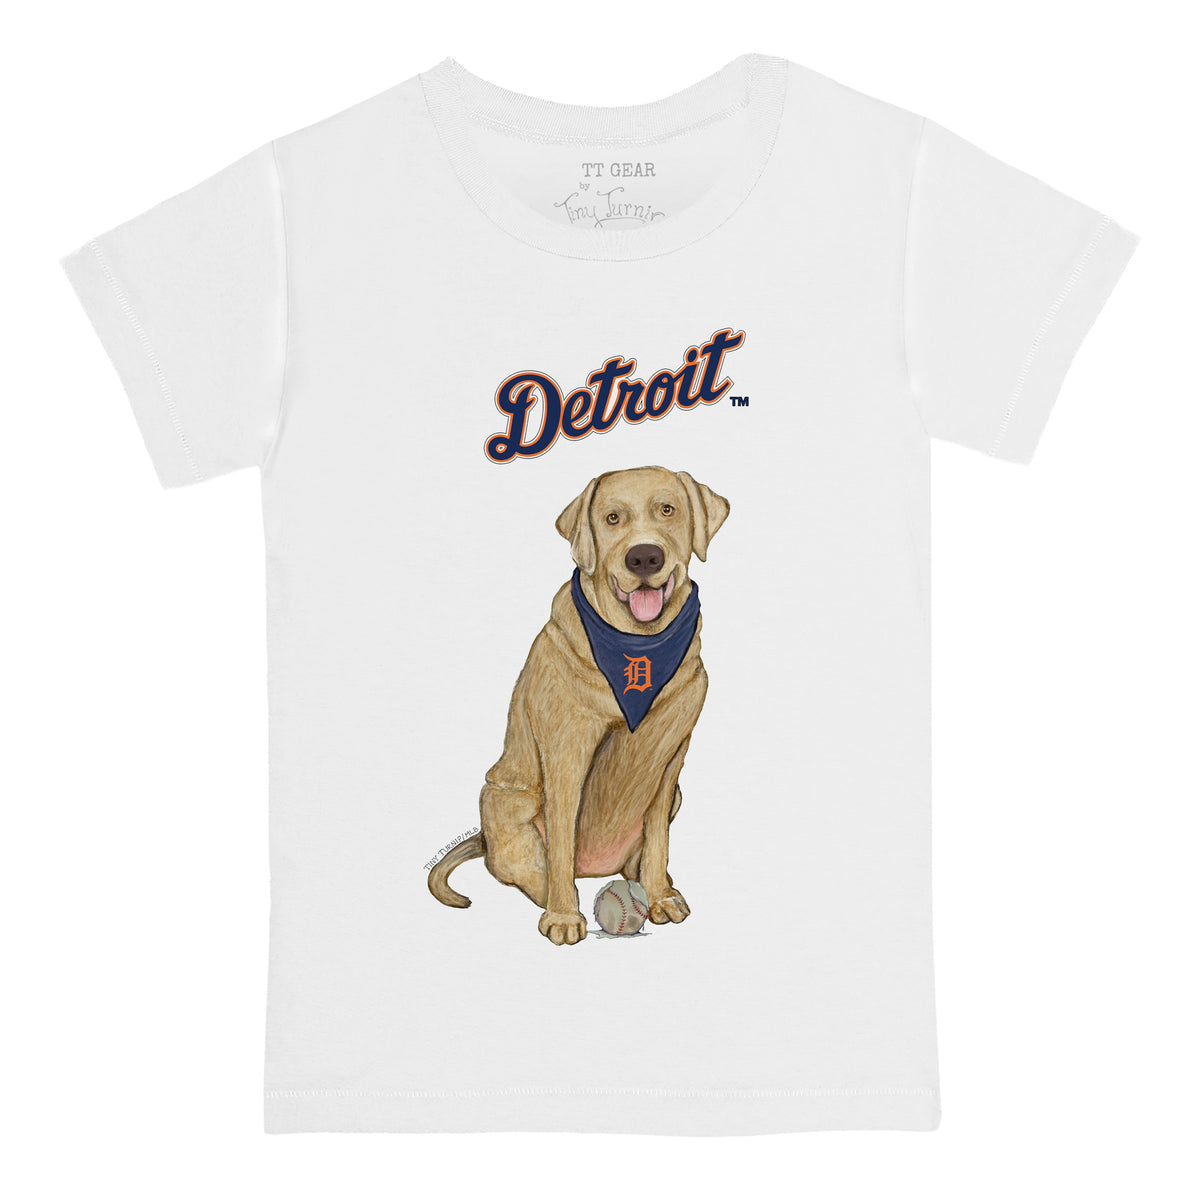 Detroit Tigers Yellow Labrador Retriever Tee Shirt